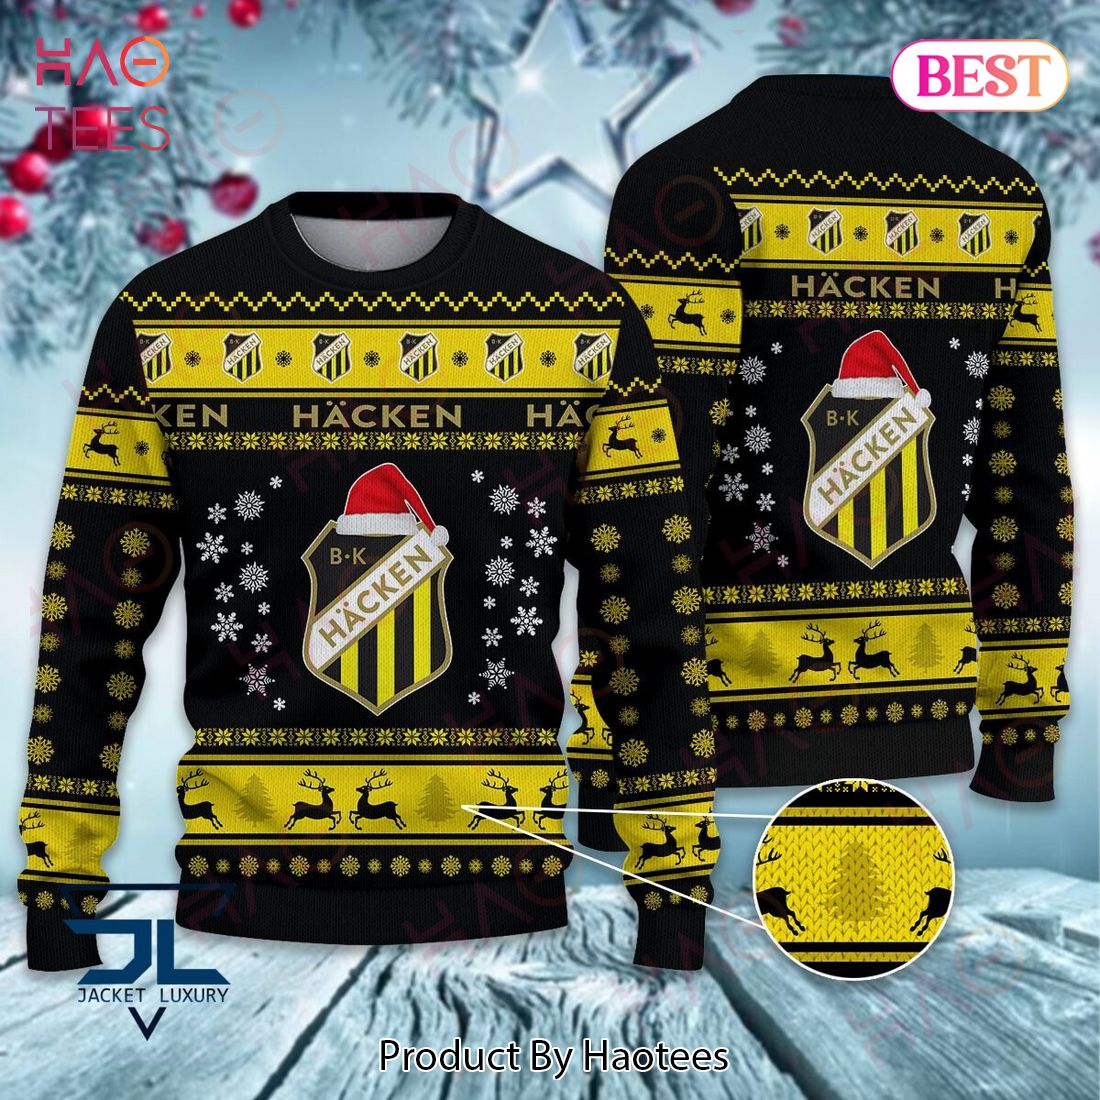 HOT Boldklubben Hacken Christmas Luxury Brand Sweater Limited Edition